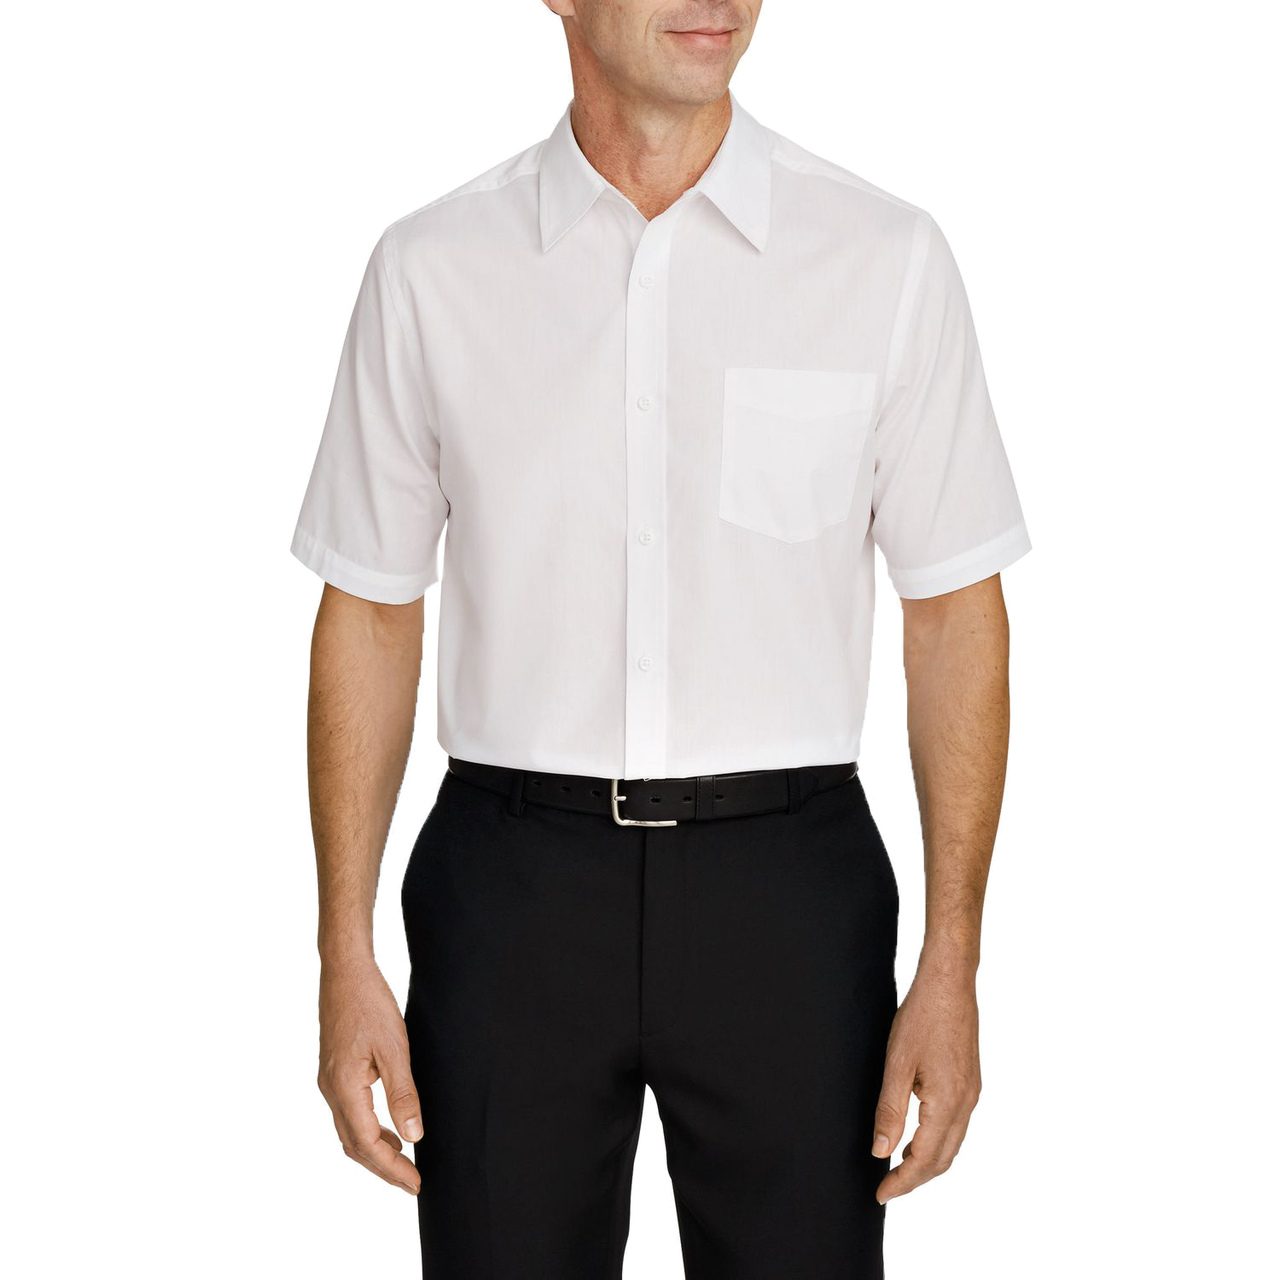 Camisa Social Masculina Manga Curta Branco